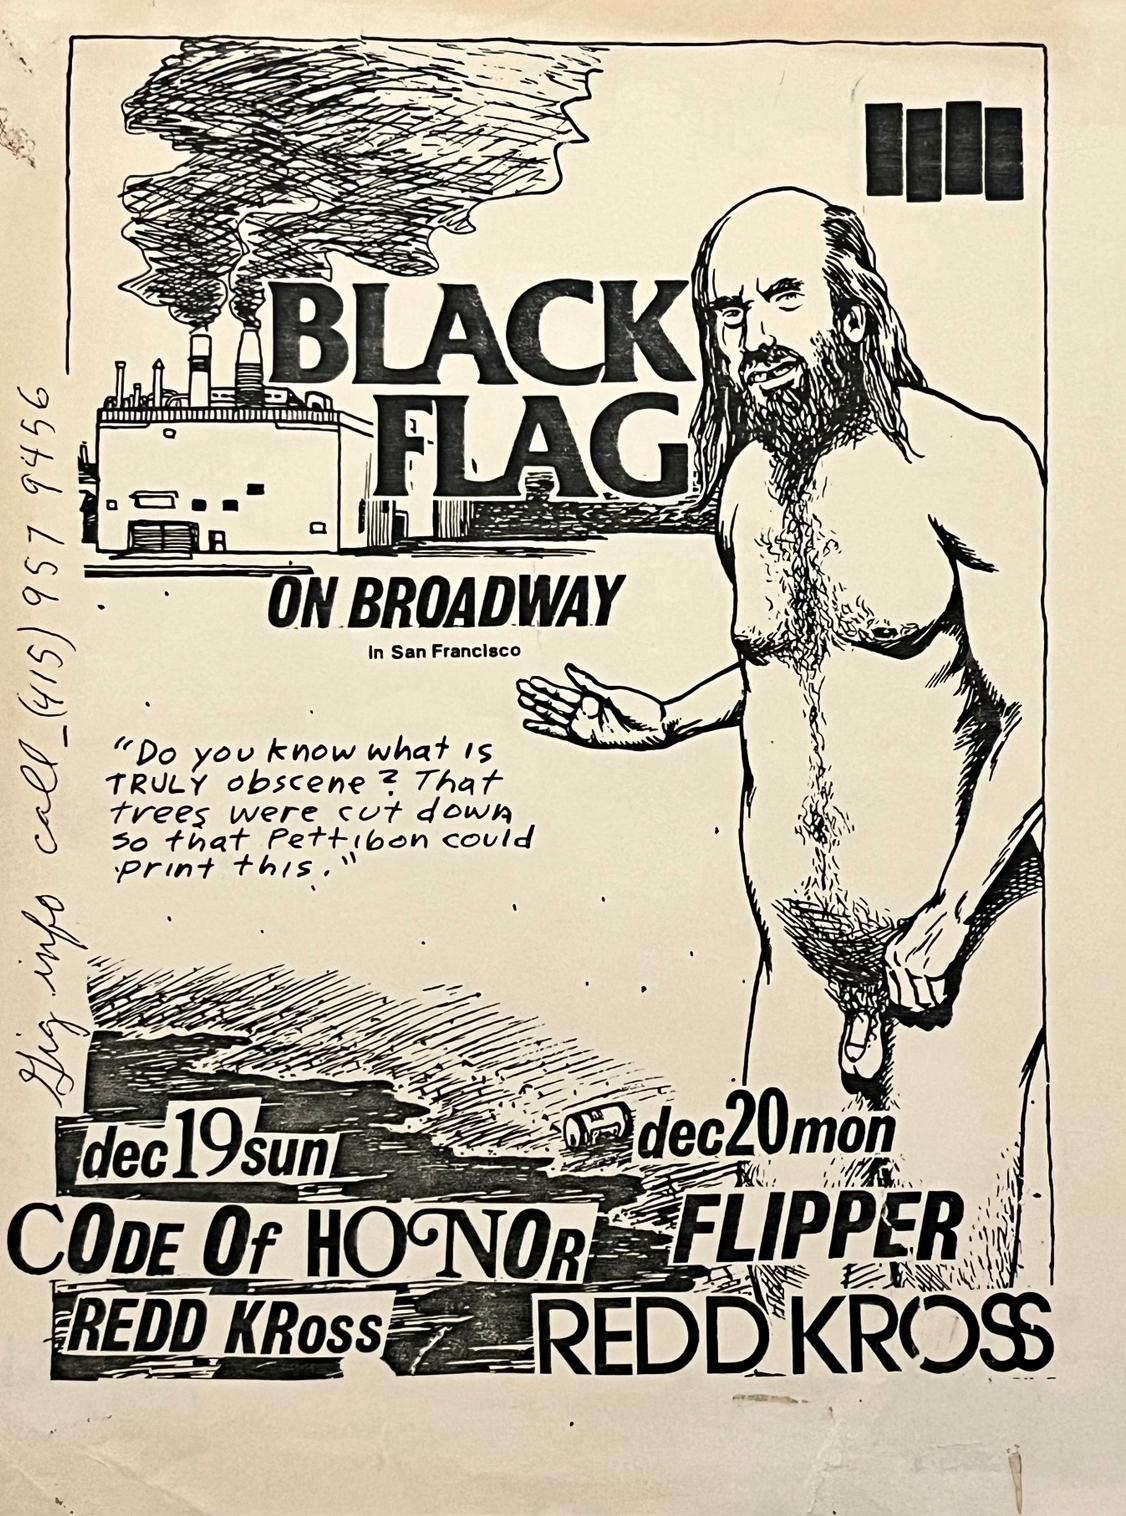 Raymond Pettibon illustrated Black Flag flyer published on the occasion of:  Black Flag on Broadway / Dec. 19 1982 / Dec. 20 1982 with Code of Honor, Redd Kross, Nig-Heist, & Flipper. A rare striking early Pettibon punk illustration.

Flea, the Red